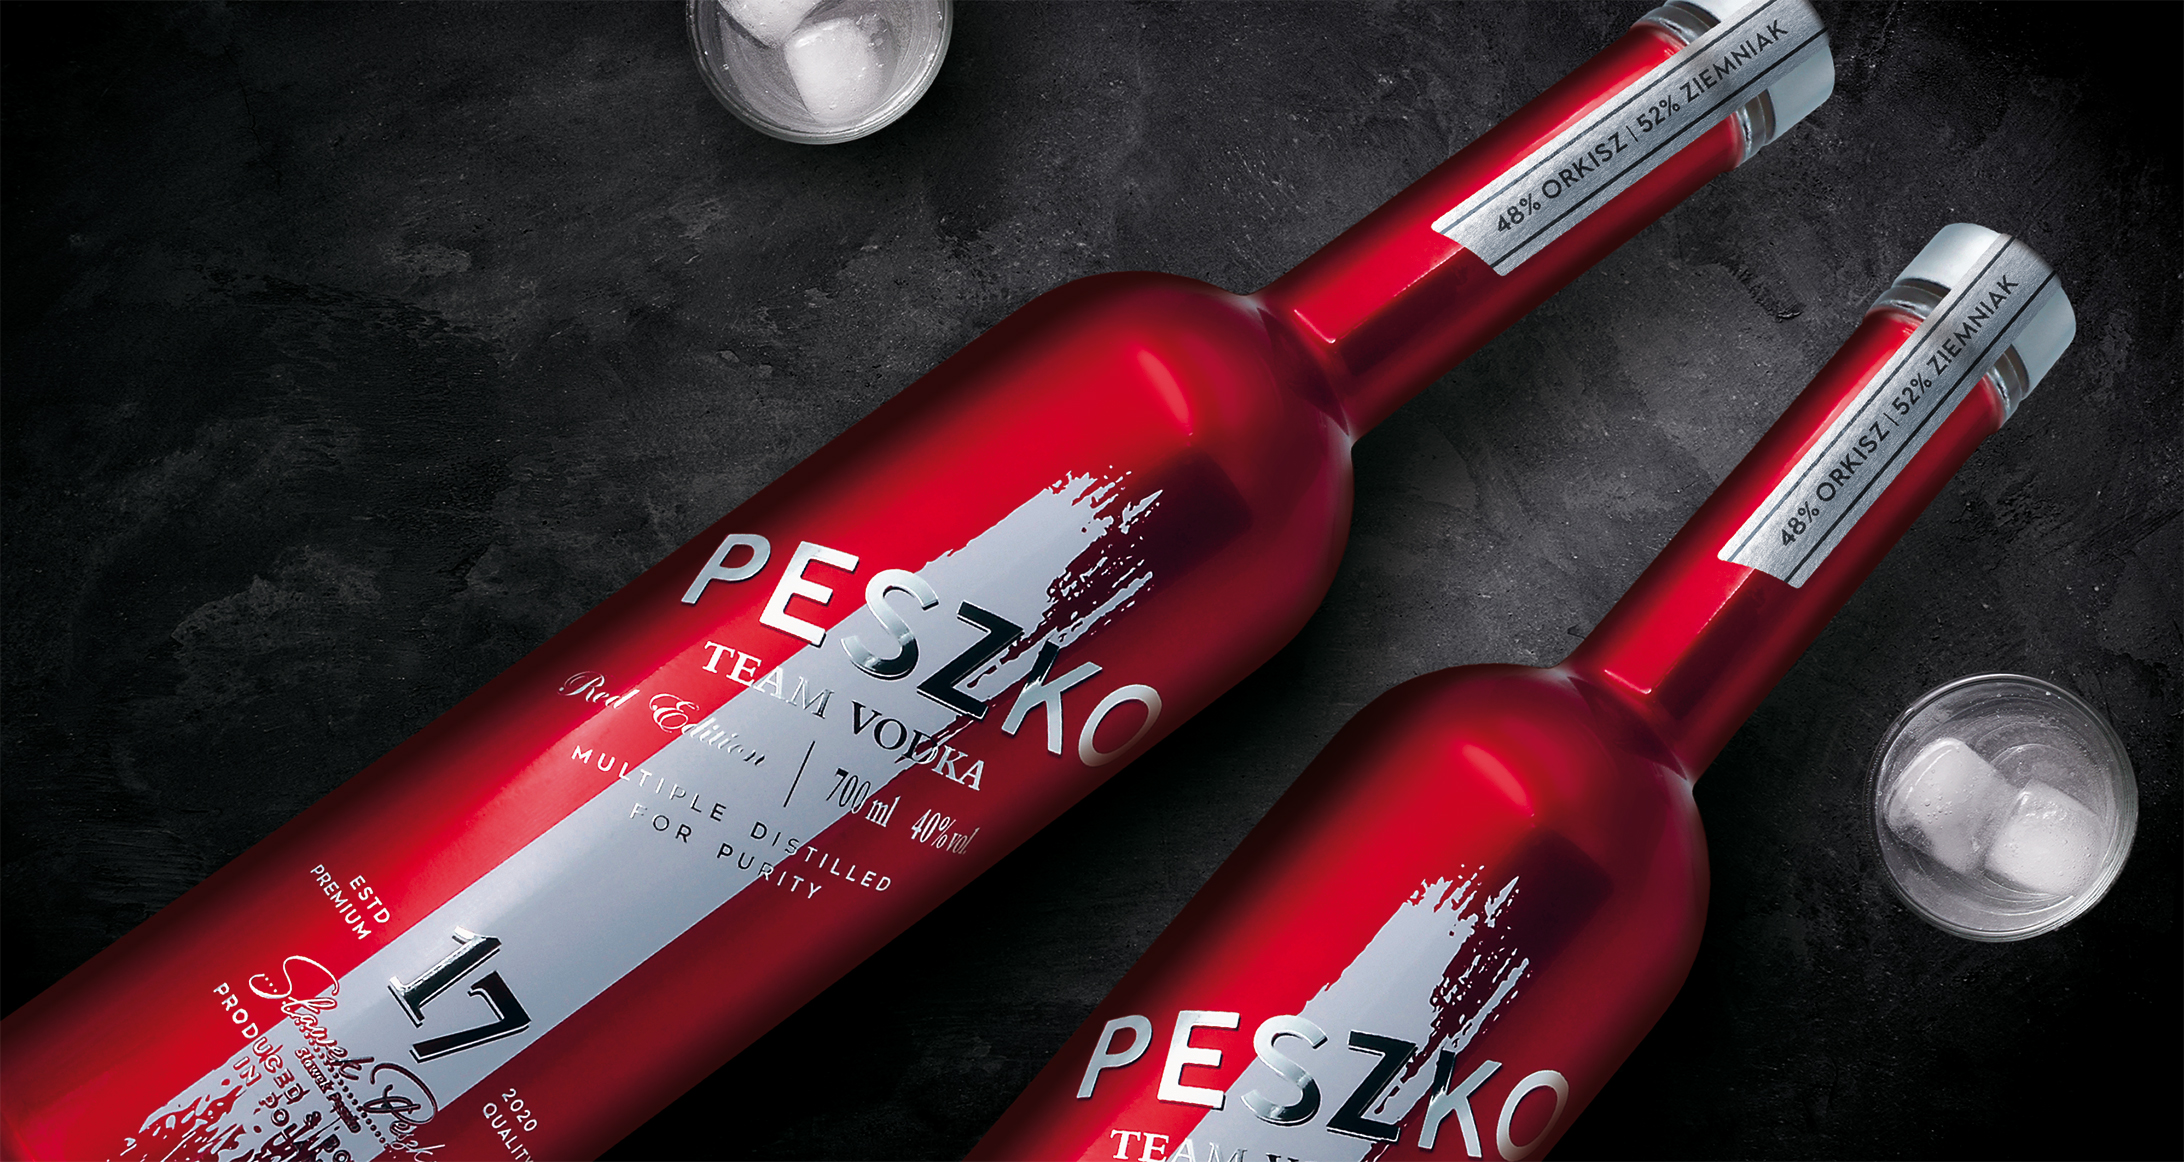 peszko team vodka new packaging design